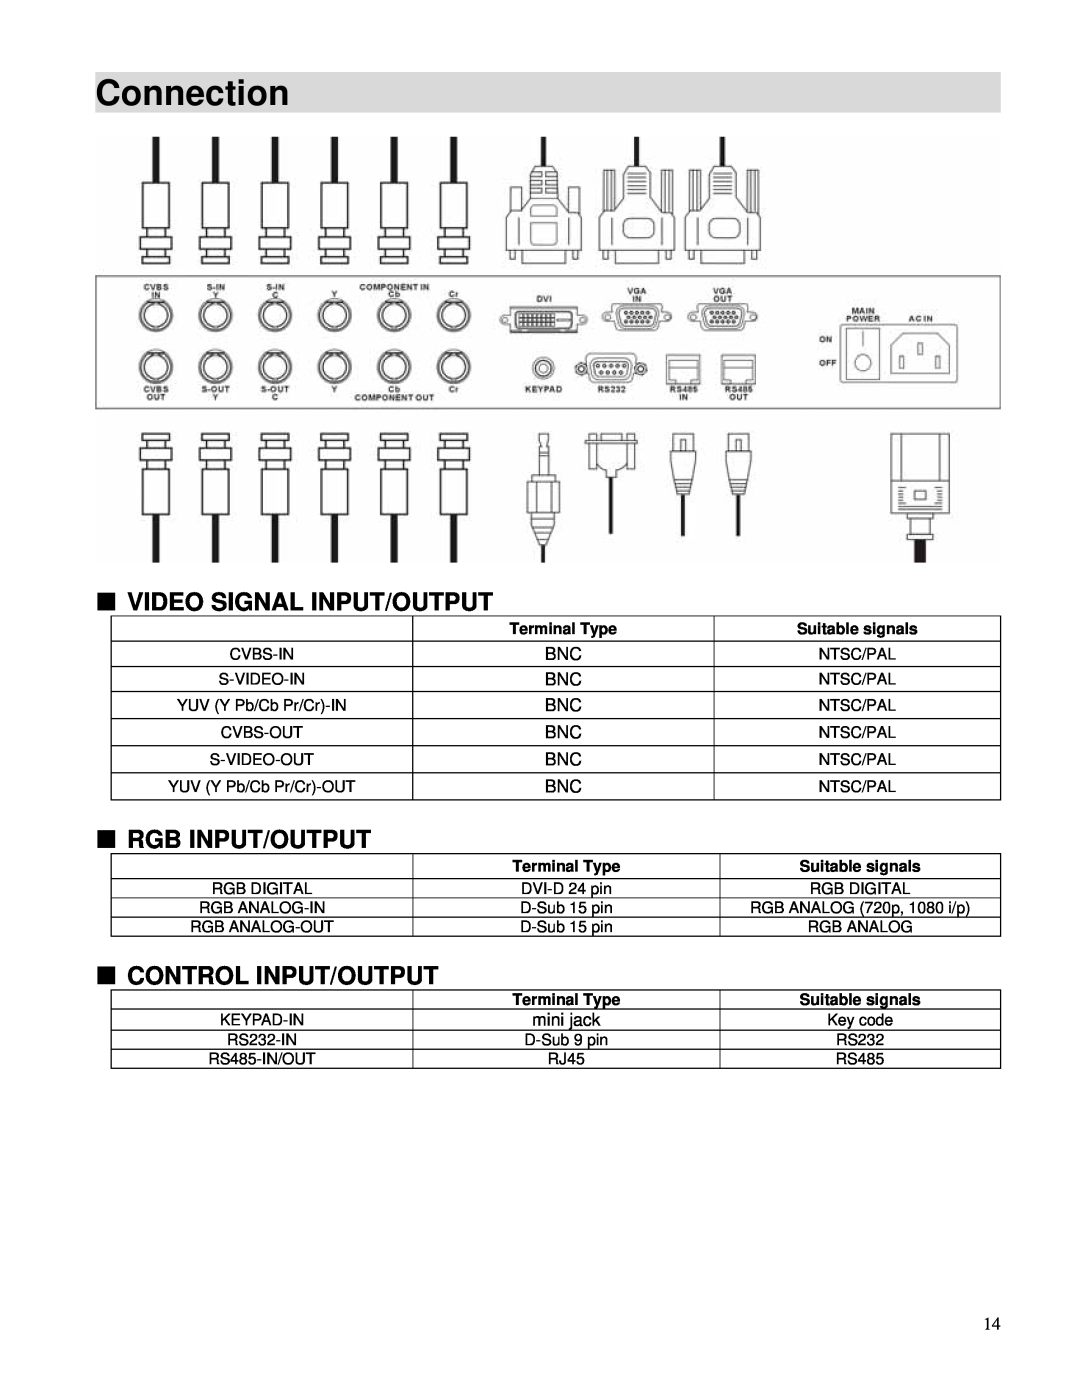 Toshiba P42LHA owner manual Connection, Video Signal Input/Output, Rgb Input/Output, Control Input/Output, Terminal Type 